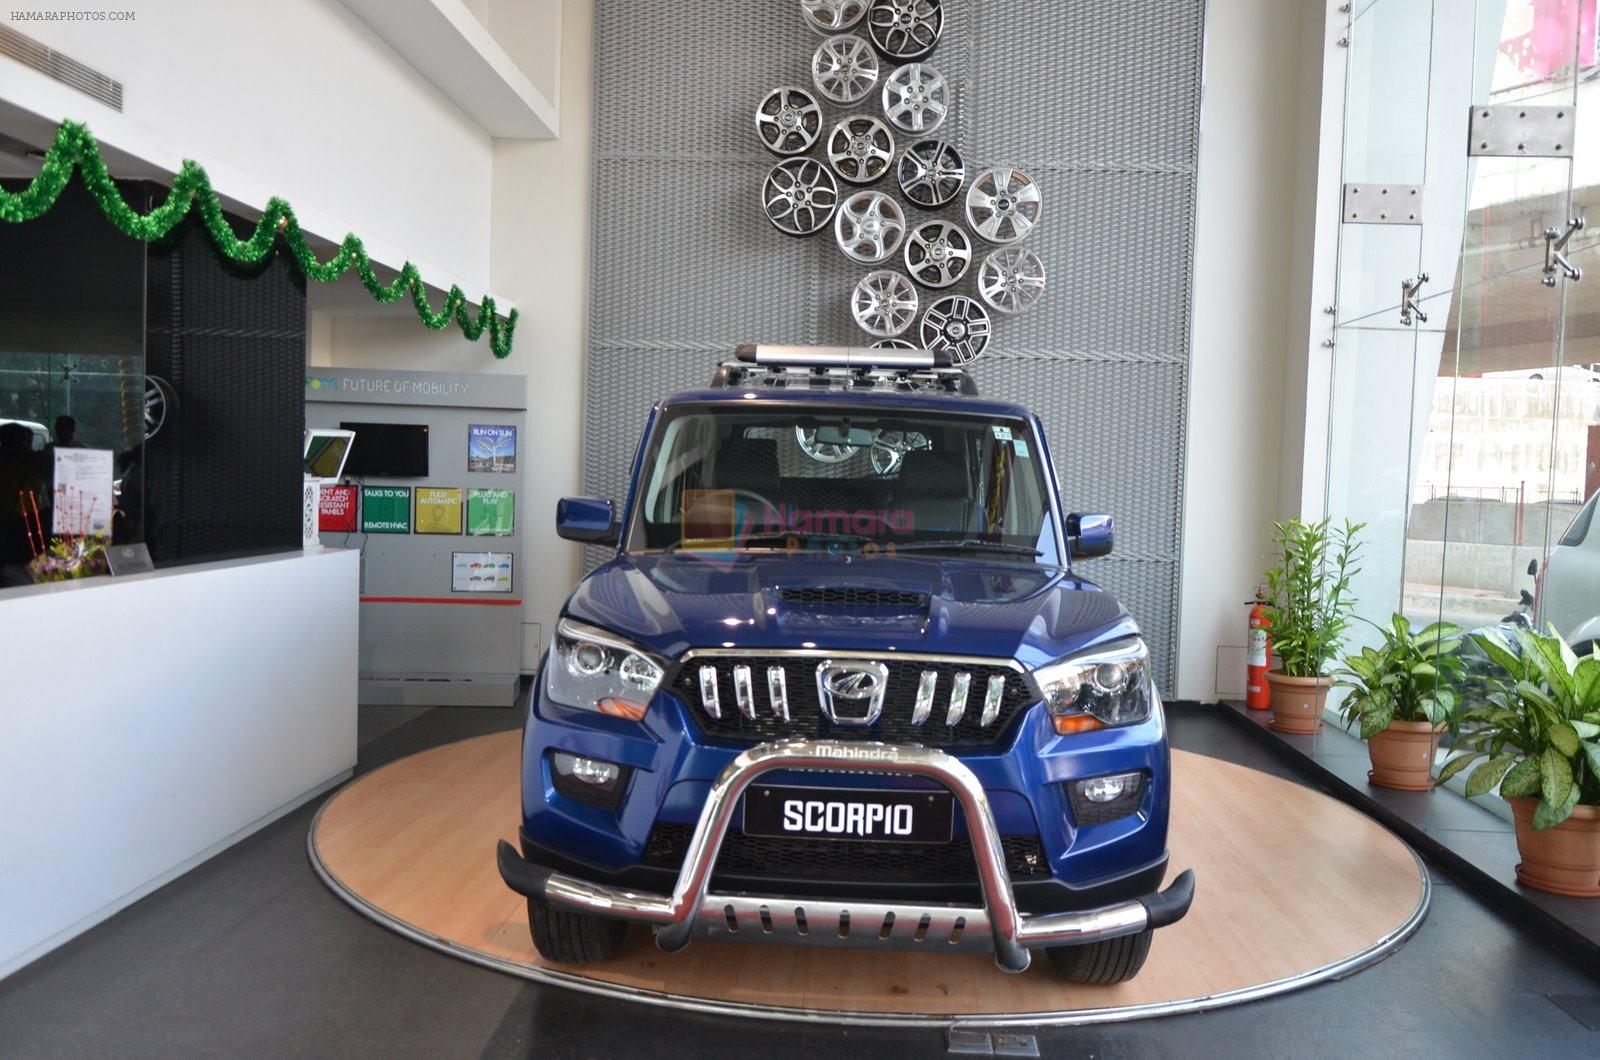 Gul Panag buys the clean green electric vehicle - Mahindra e20 in Mumbai on 2nd Jan 2015